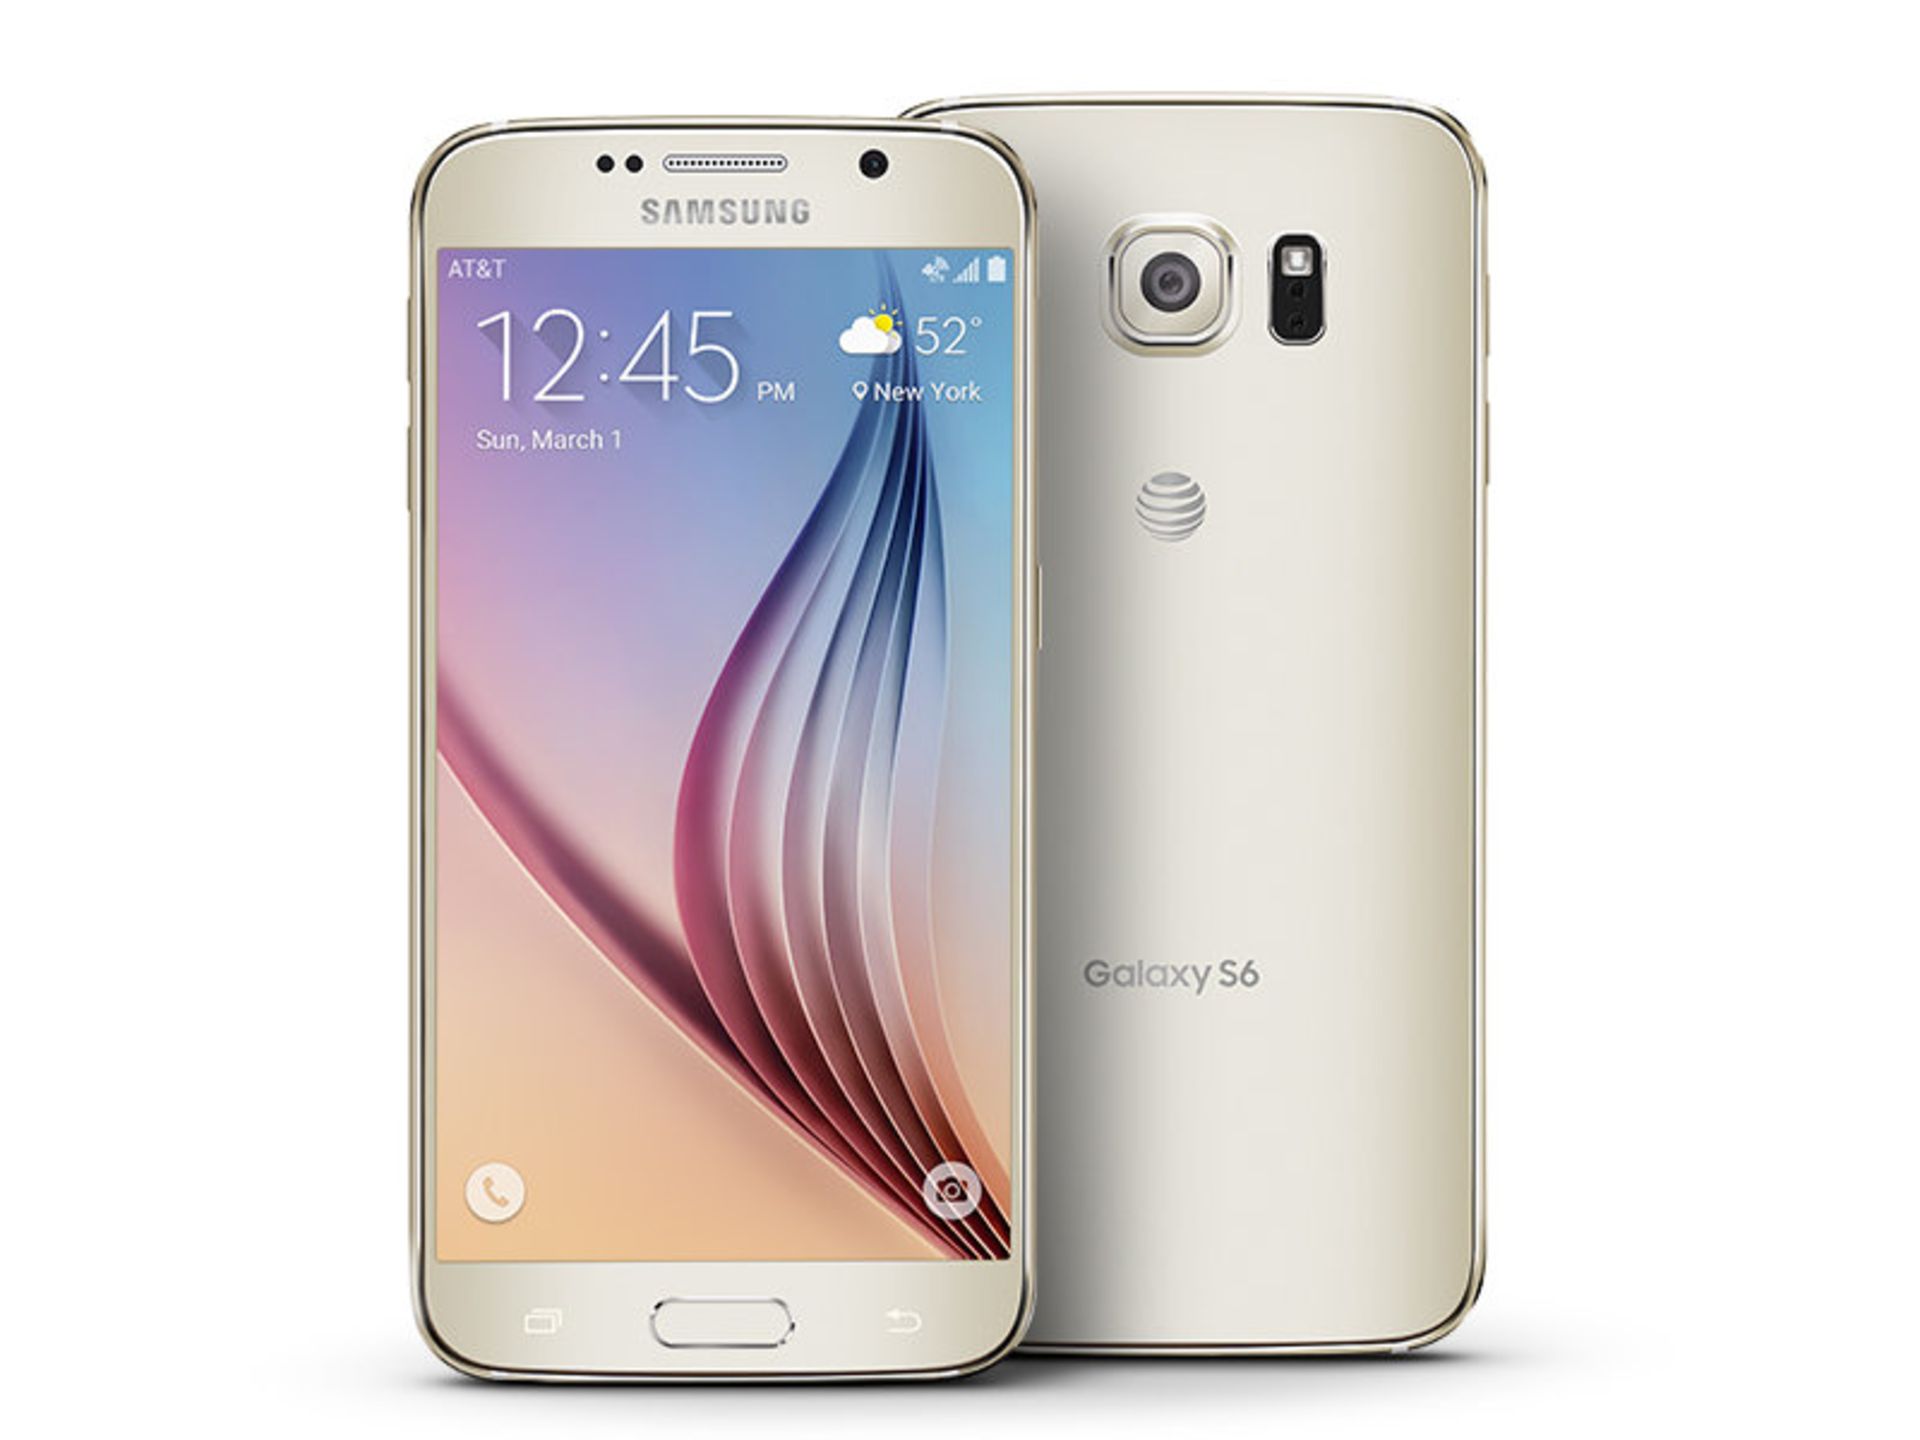 Grade A Samsung Galaxy S6 Phone - 16MP Camera - 5.1" Screen - Boxed - Colours May Vary - Available